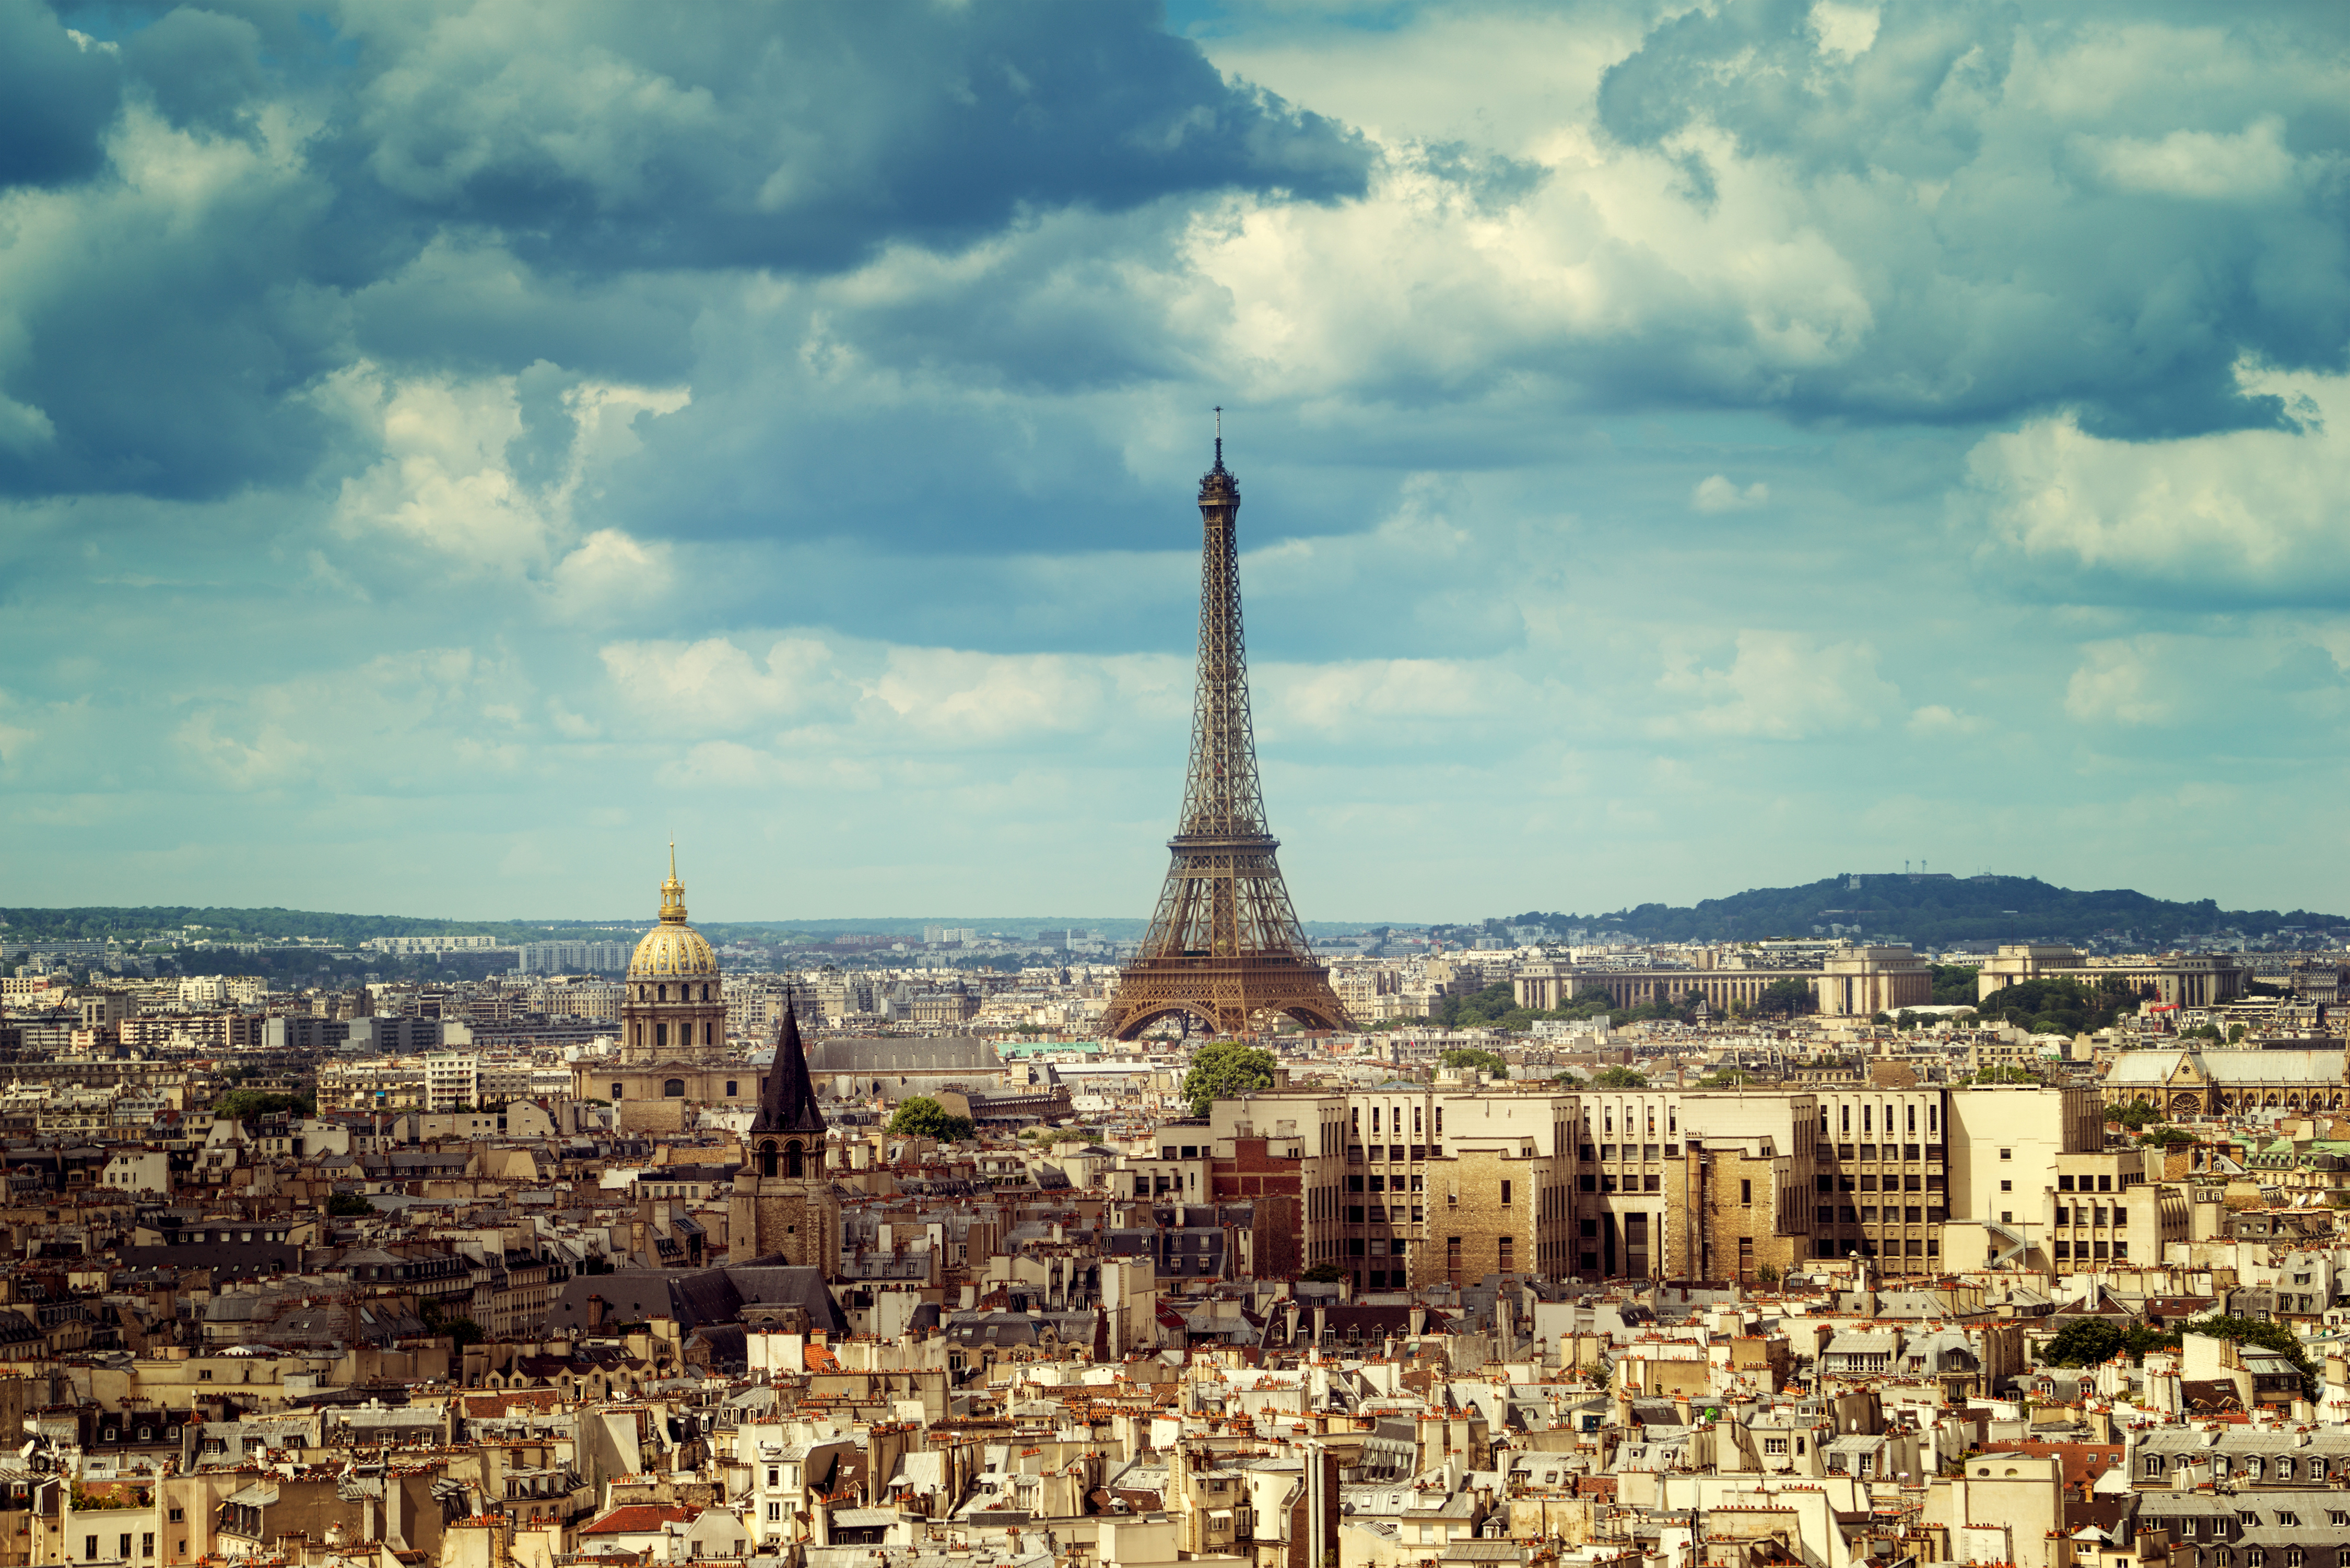  Paris  4k  Ultra HD Wallpaper  Background Image 4500x3003 